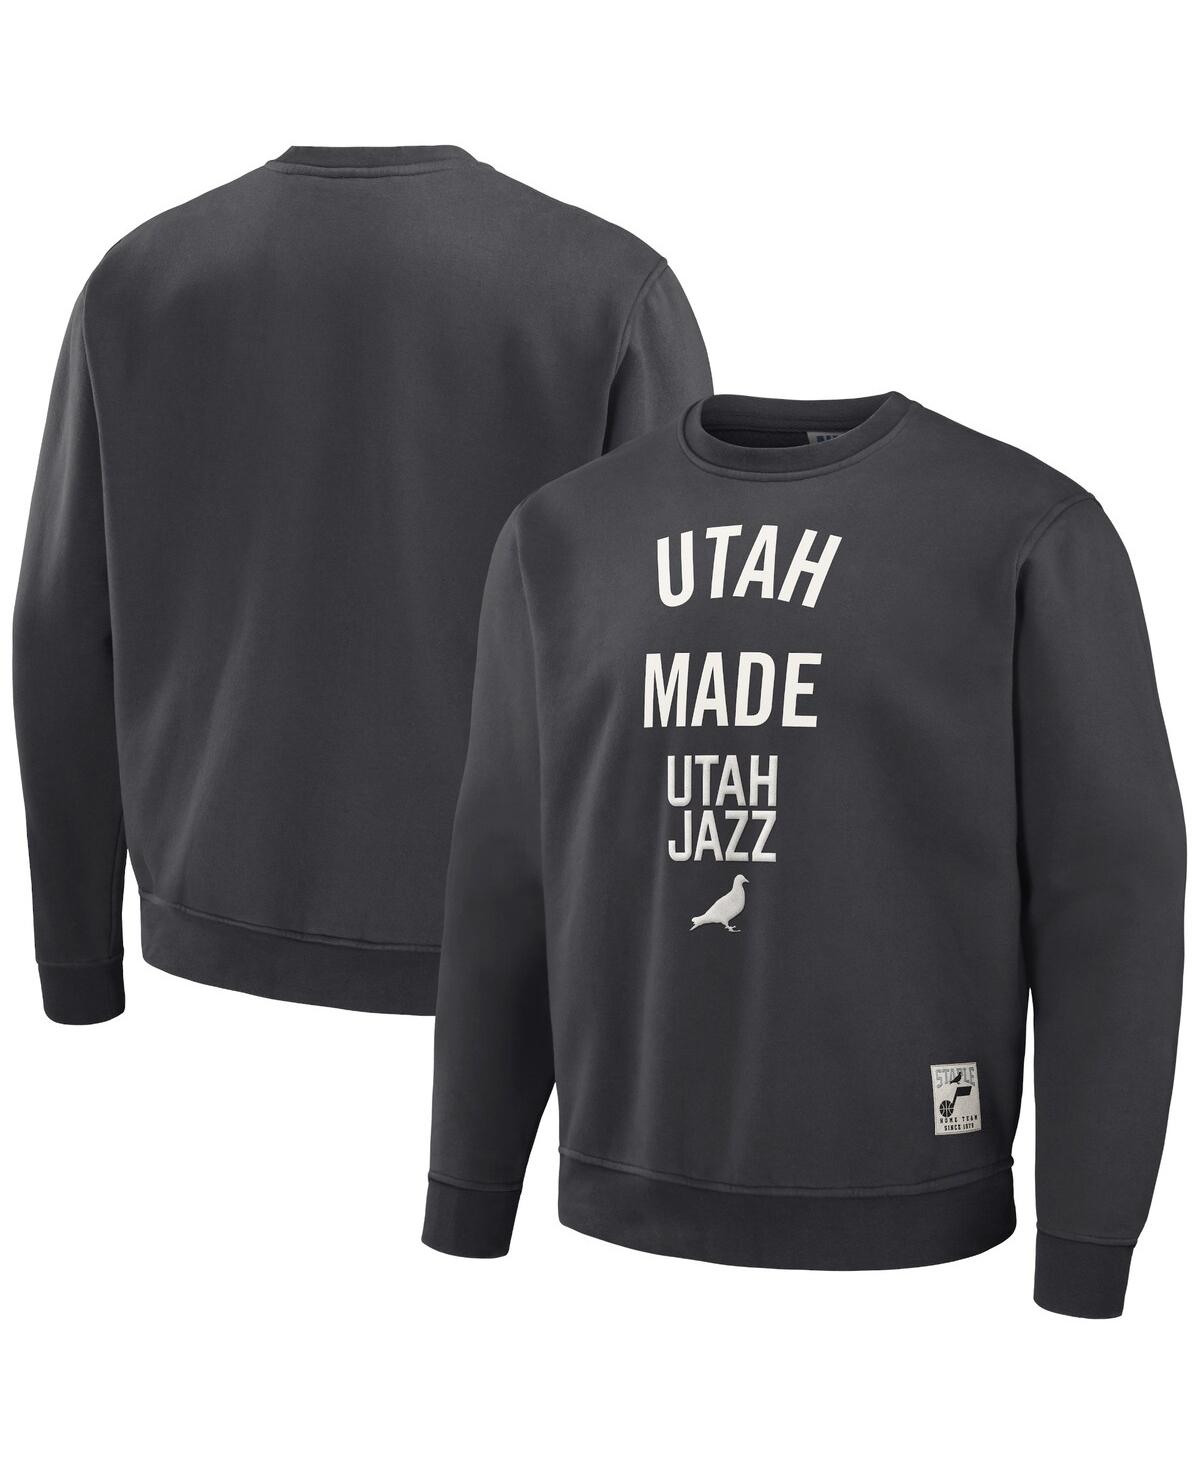 Men's Nba x Staple Anthracite Utah Jazz Plush Pullover Sweatshirt - Anthracite